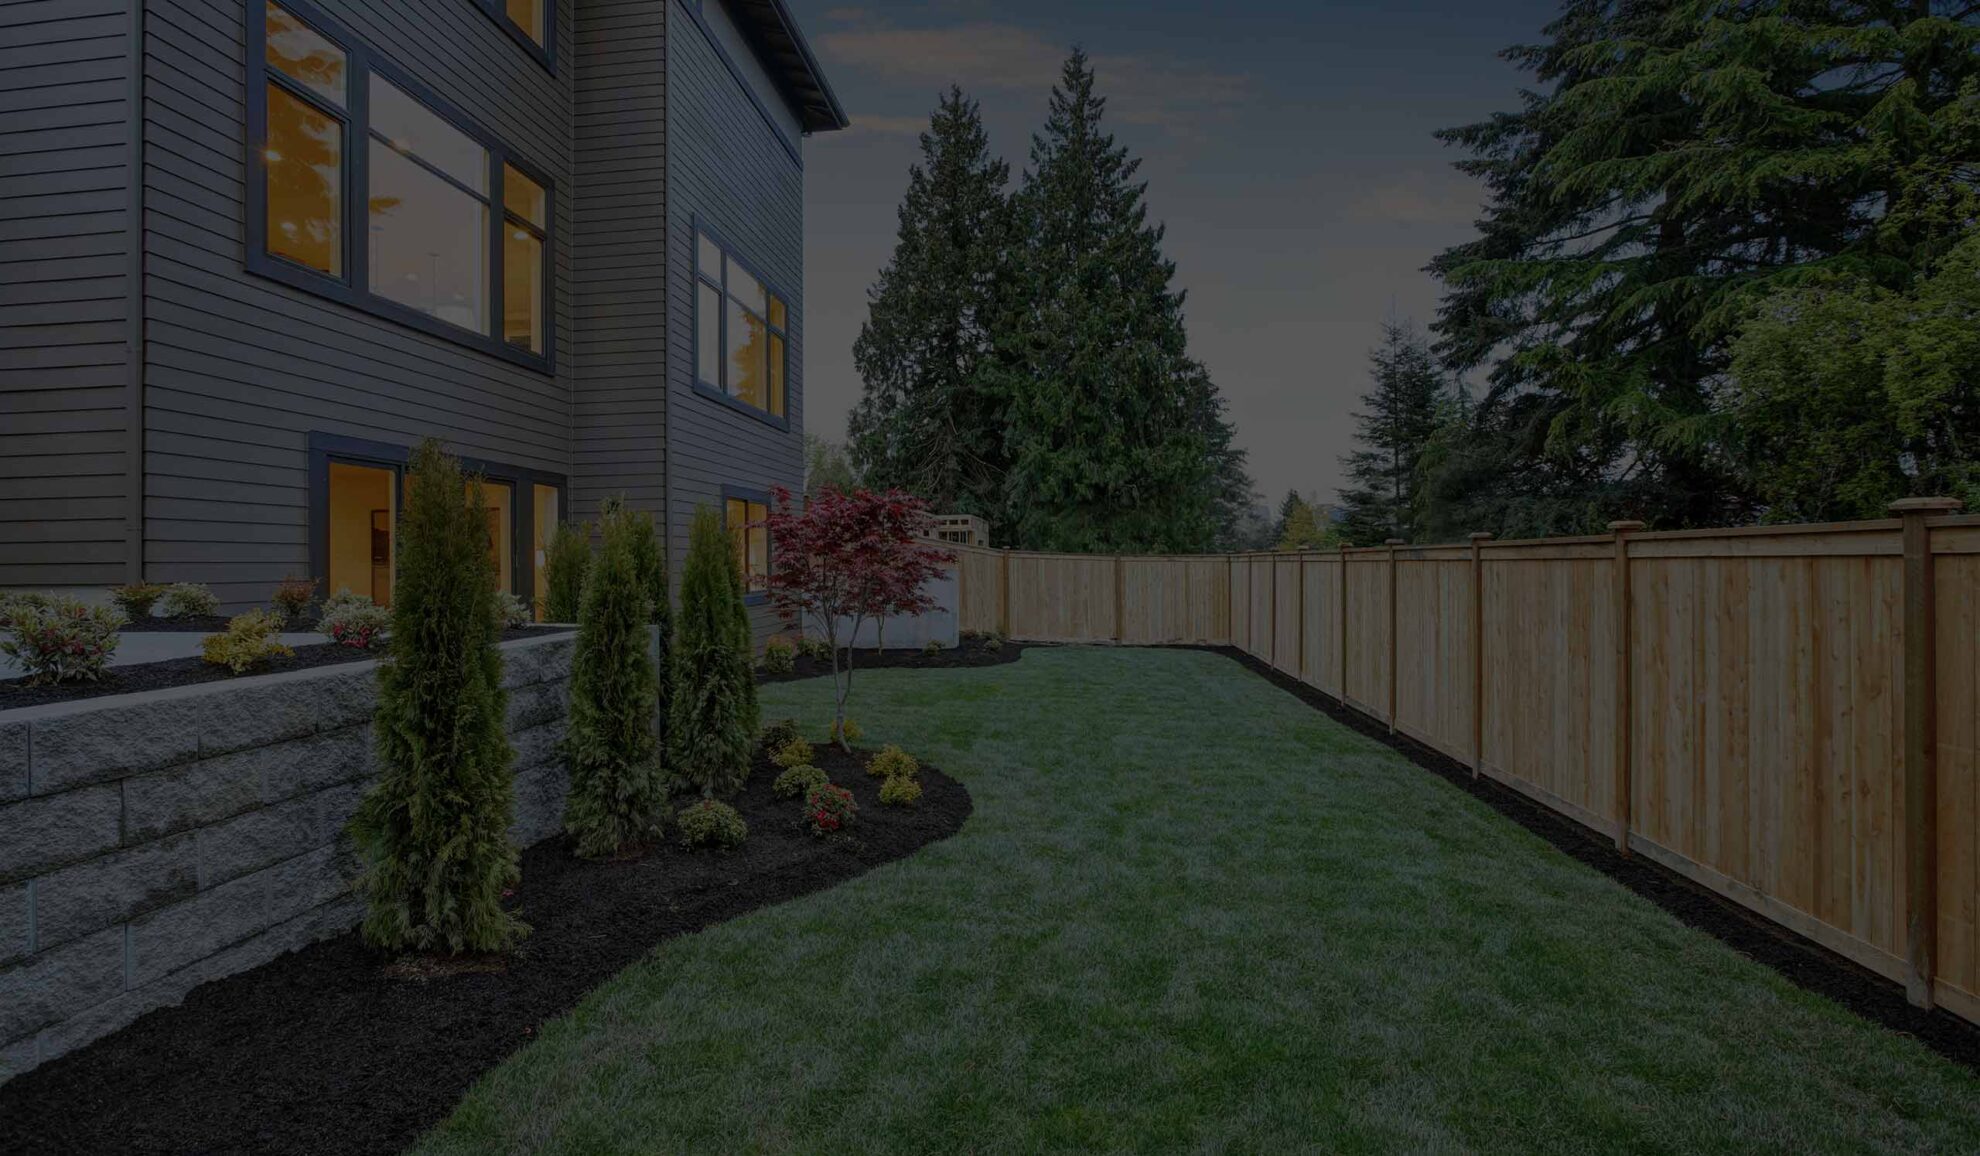 house backyard with landscape design installed and wood fencing at the back overland park ks